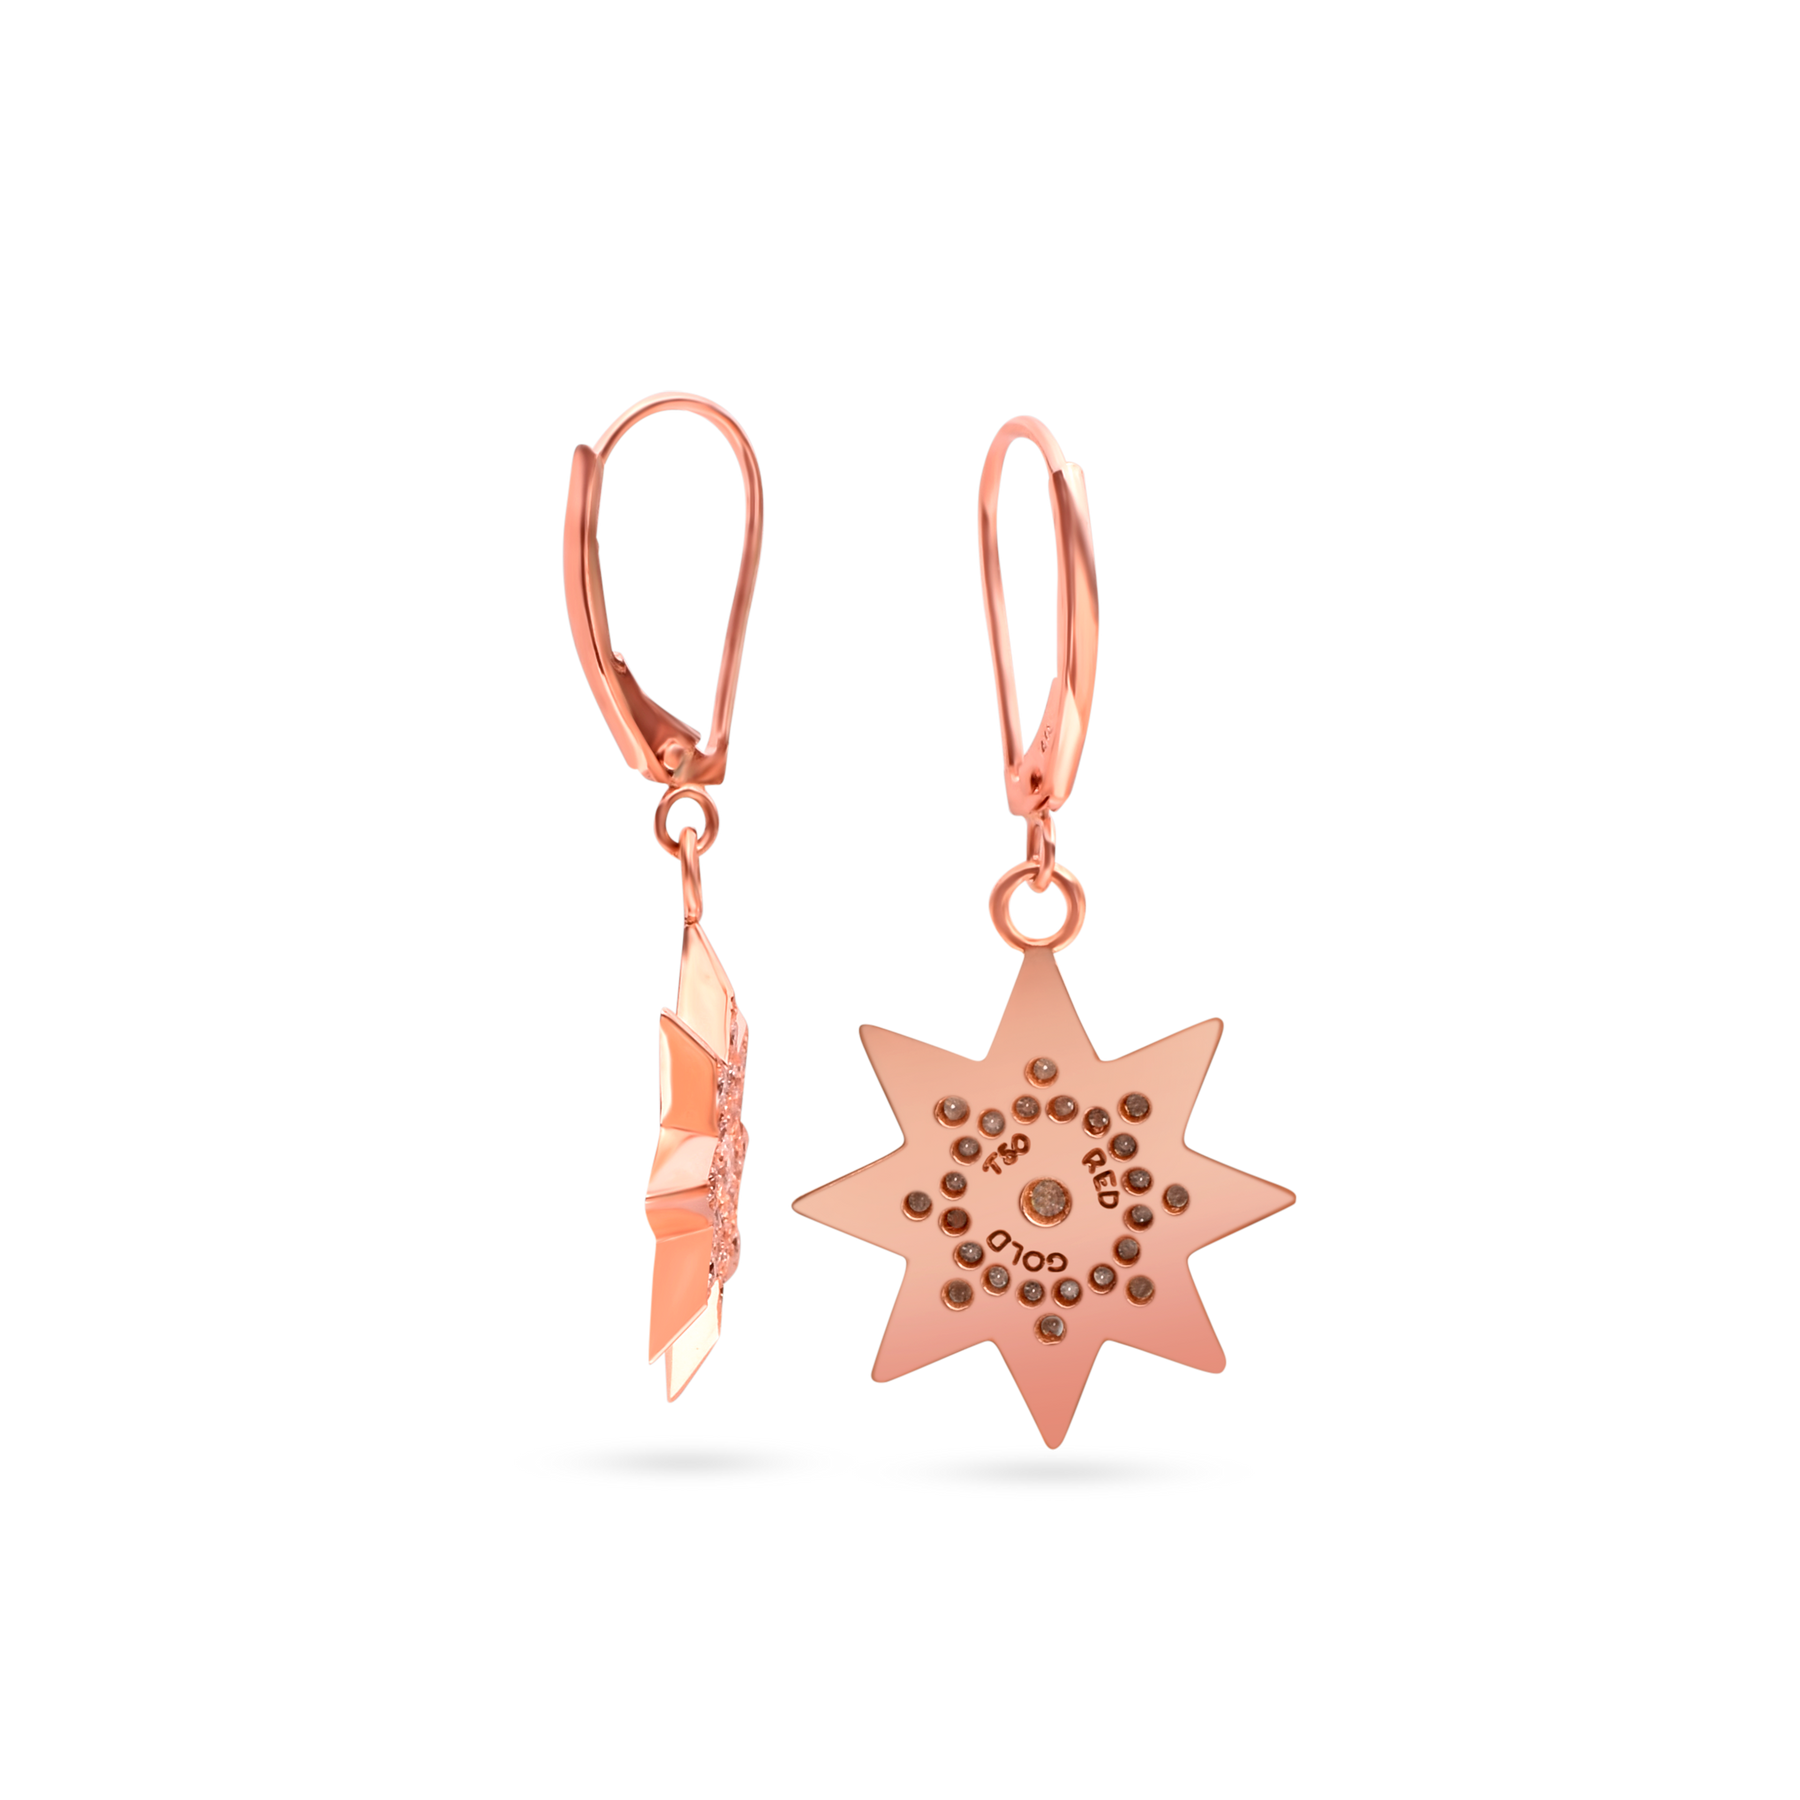 Star Earrings  -  Super Star in 18-karat Solid Gold